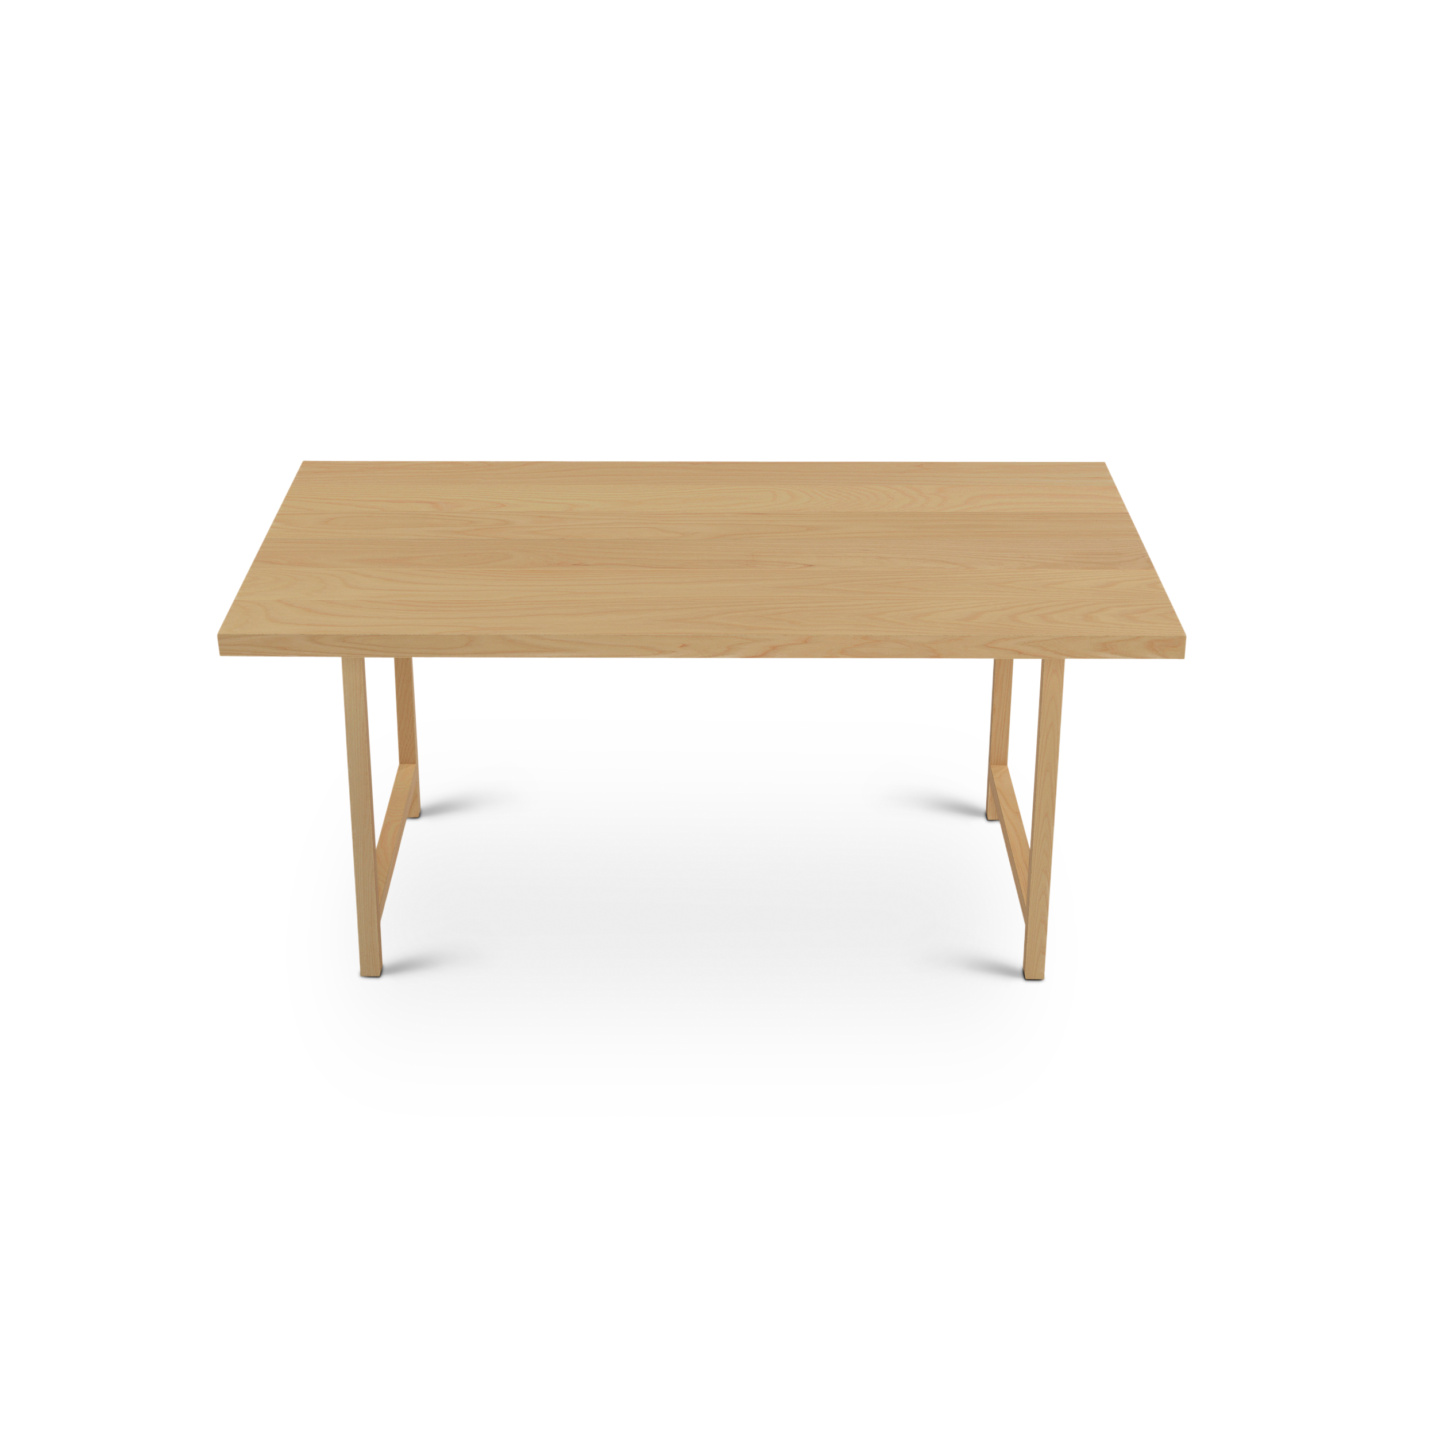 ash wood handmade nordic table